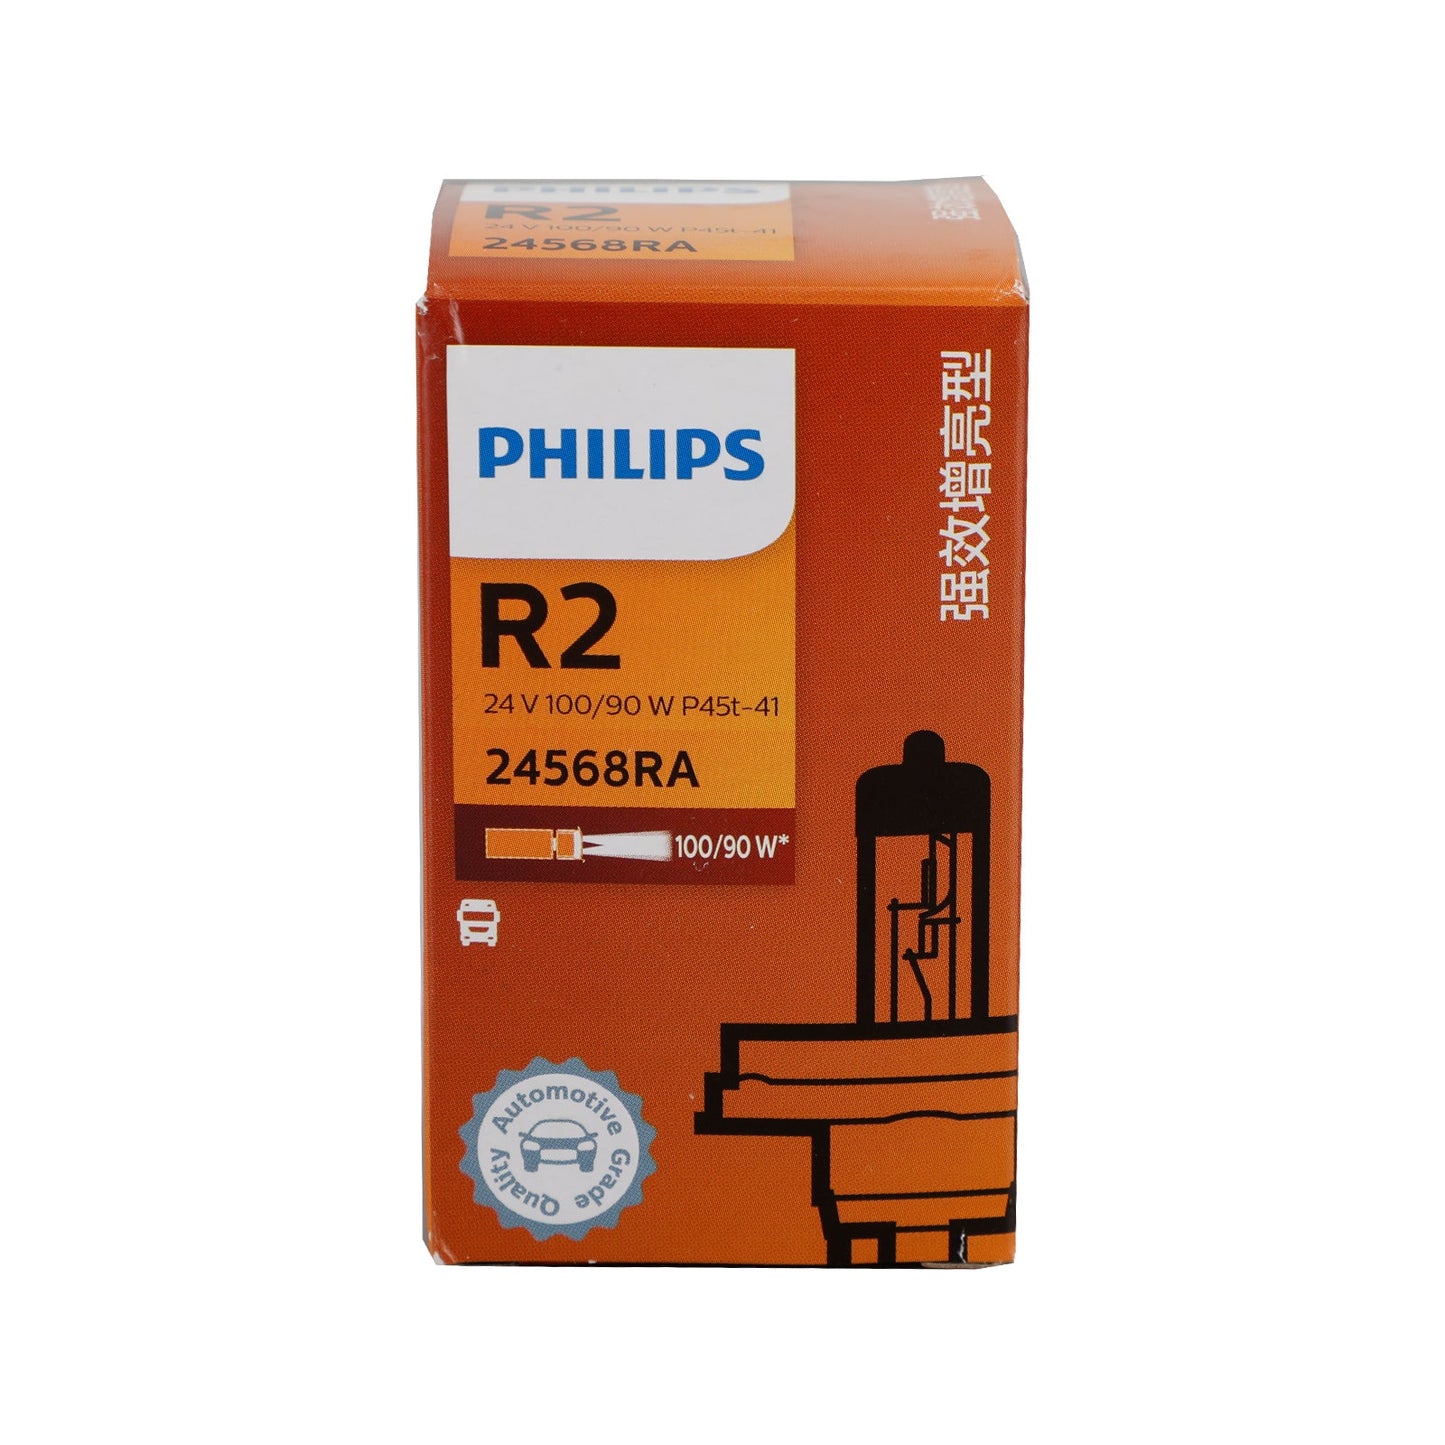 For Philips 24568RA Truck Quartz Halogen Headlight R2 24V100/90W P45t-41